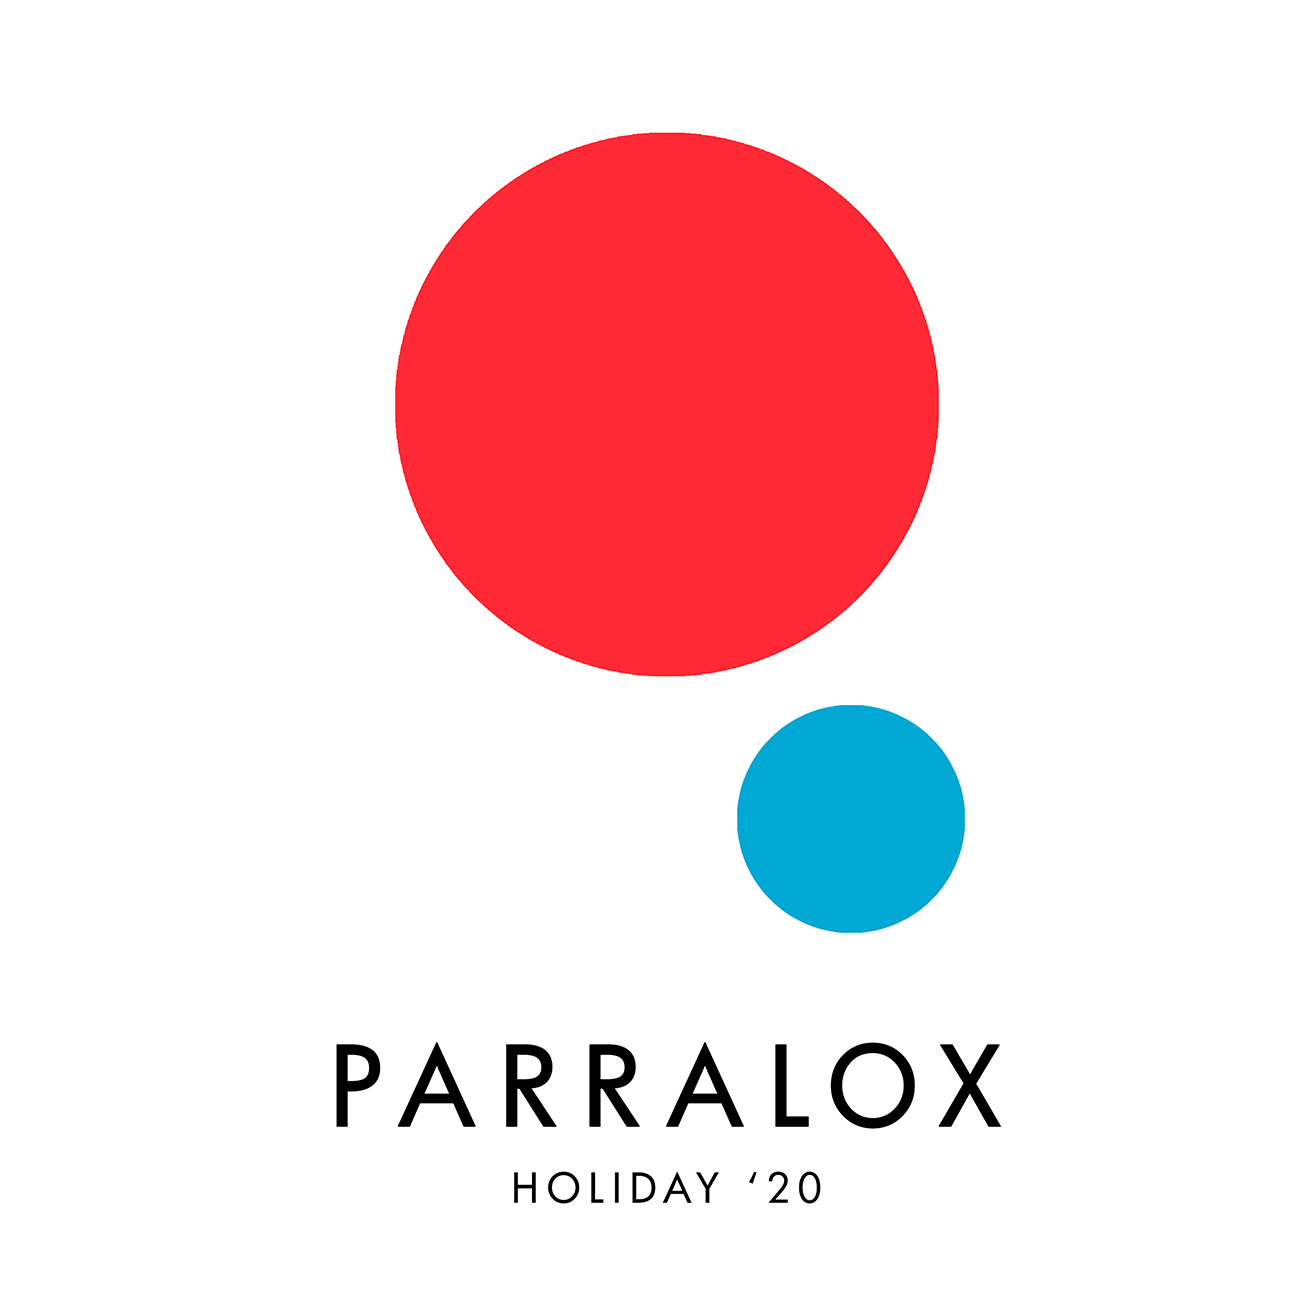 30. Parralox Holiday 20